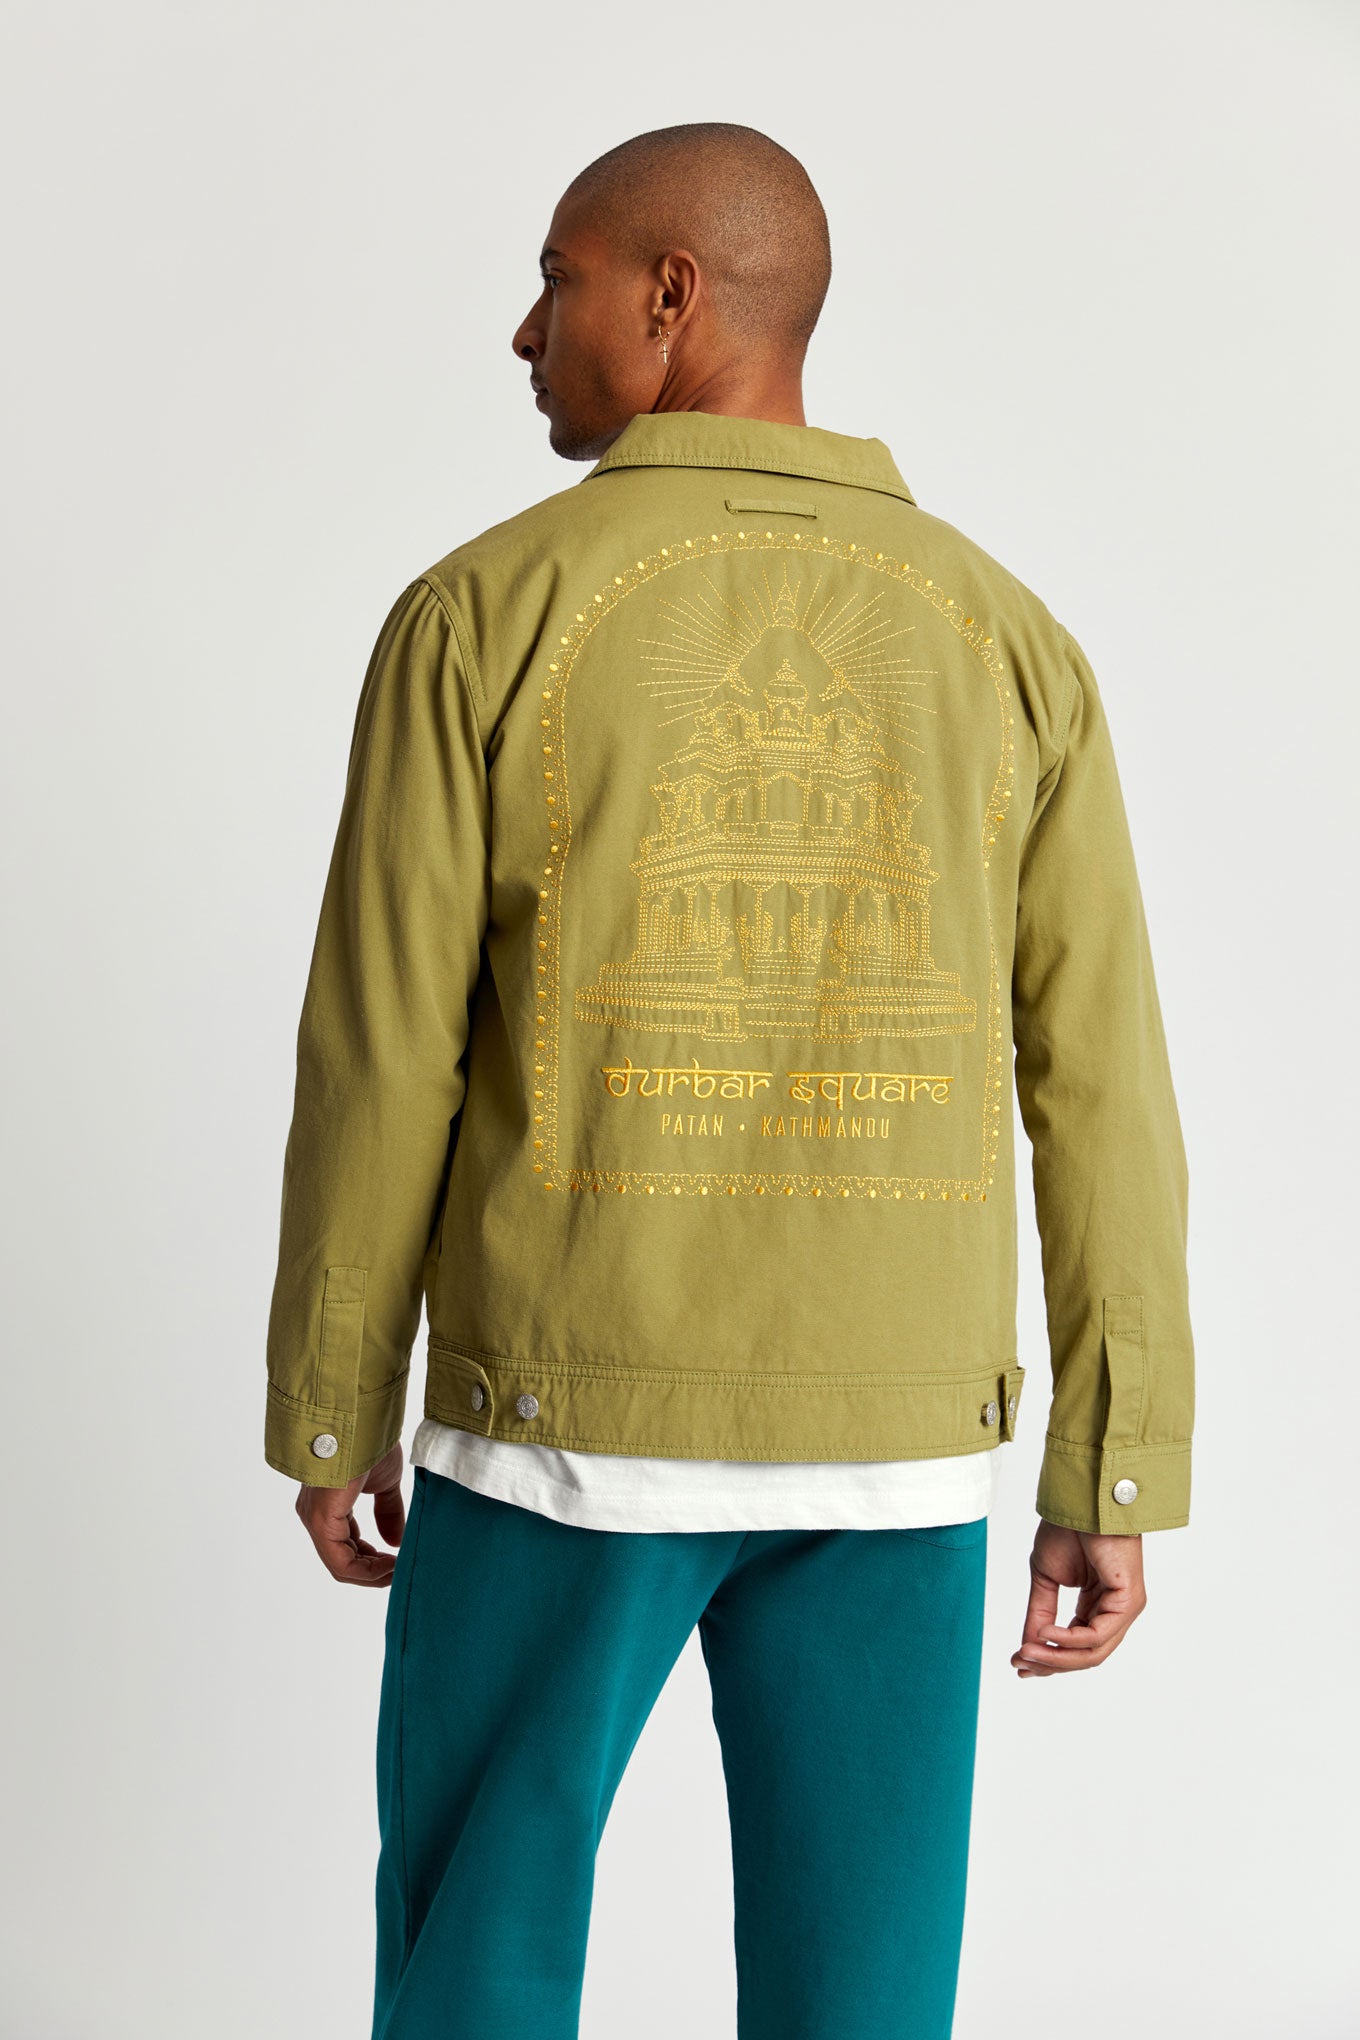 DUNBAR Organic Cotton Men’s Jacket - Khaki, Medium